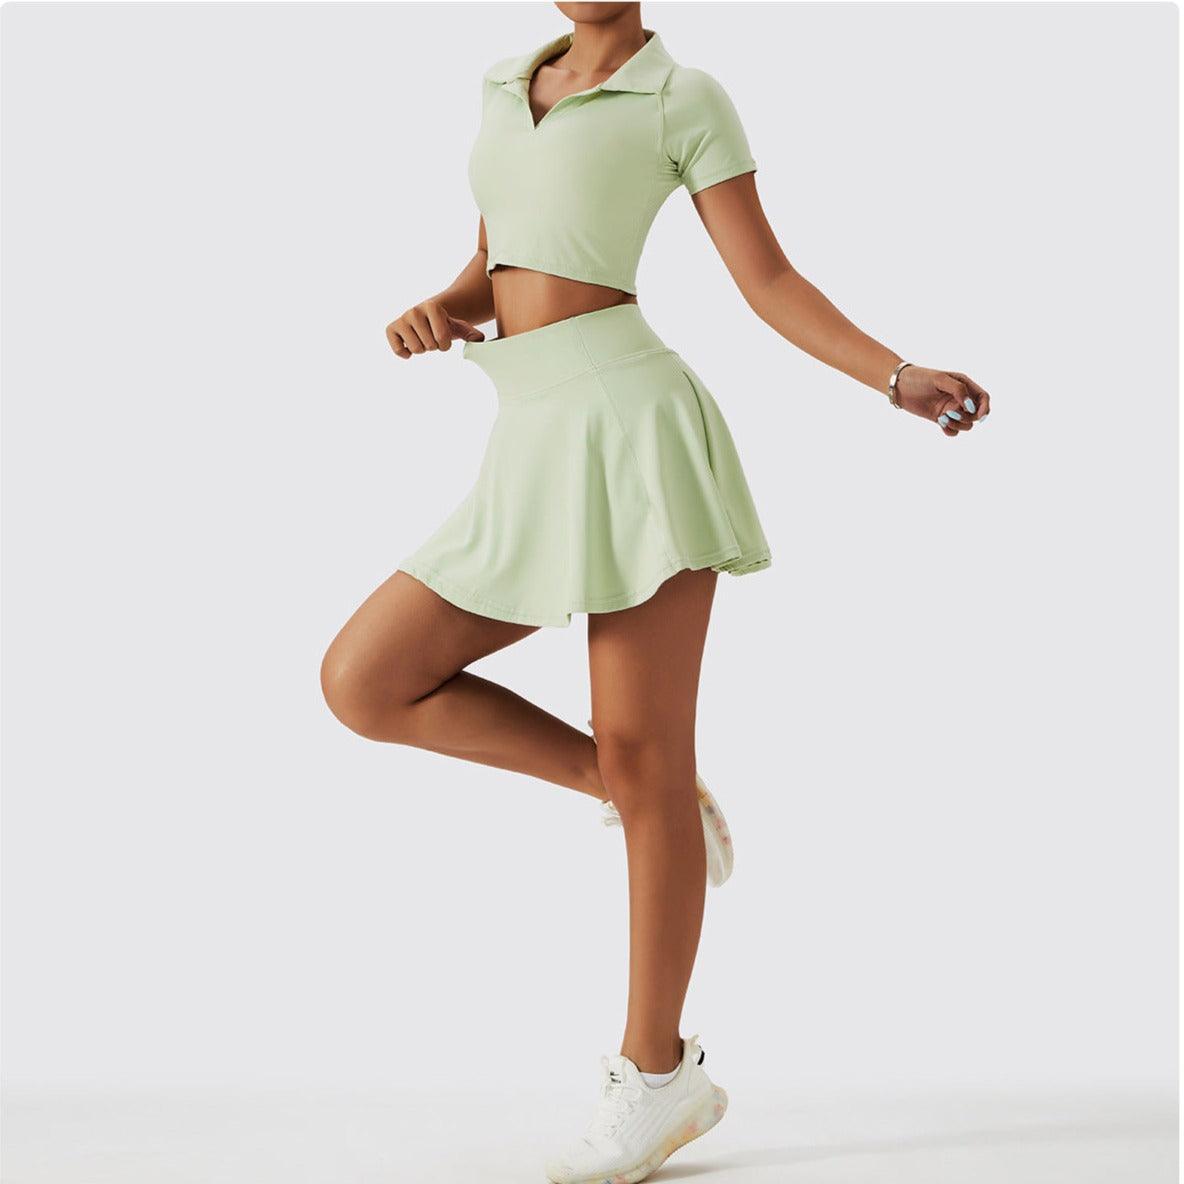 Mint Athletic Skirt